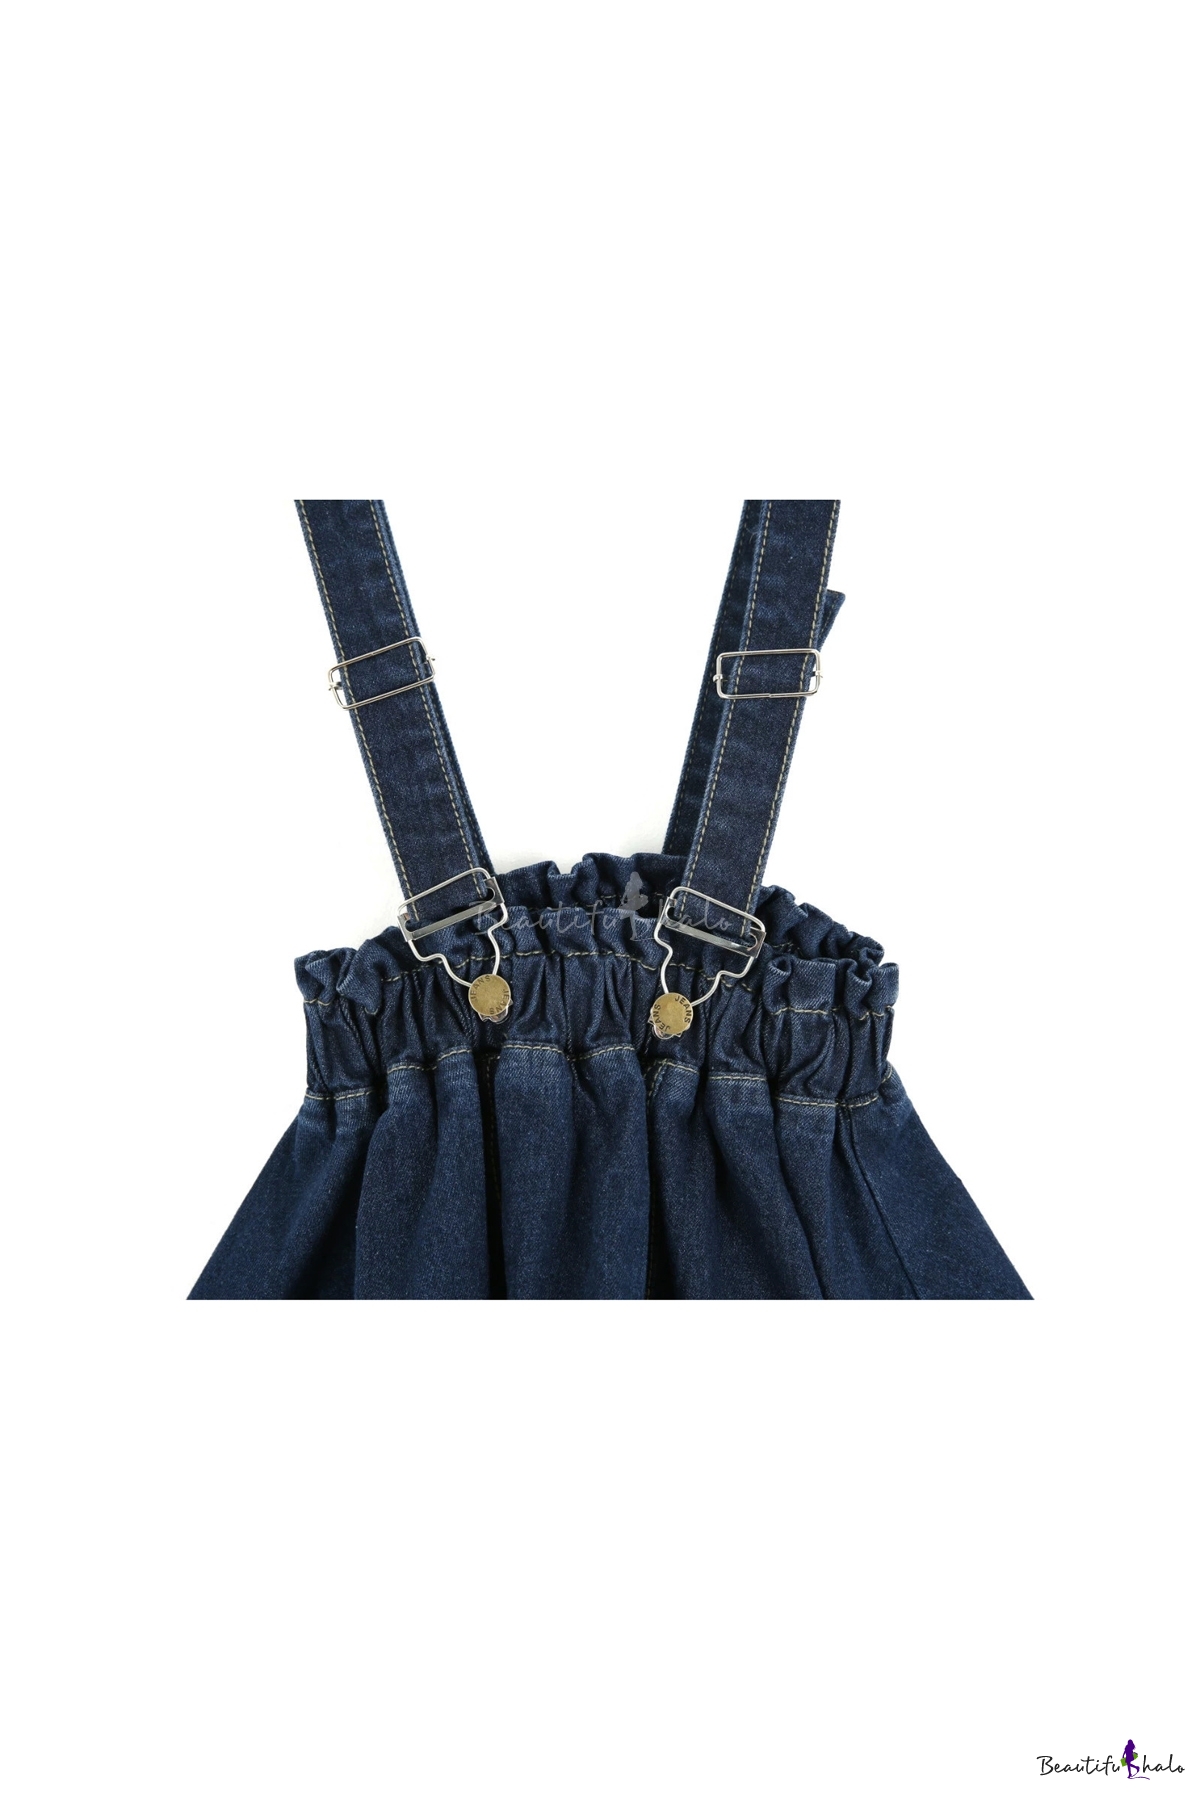 Dark Blue Elastic High Waist Mini Denim Overall Skirt - Beautifulhalo.com